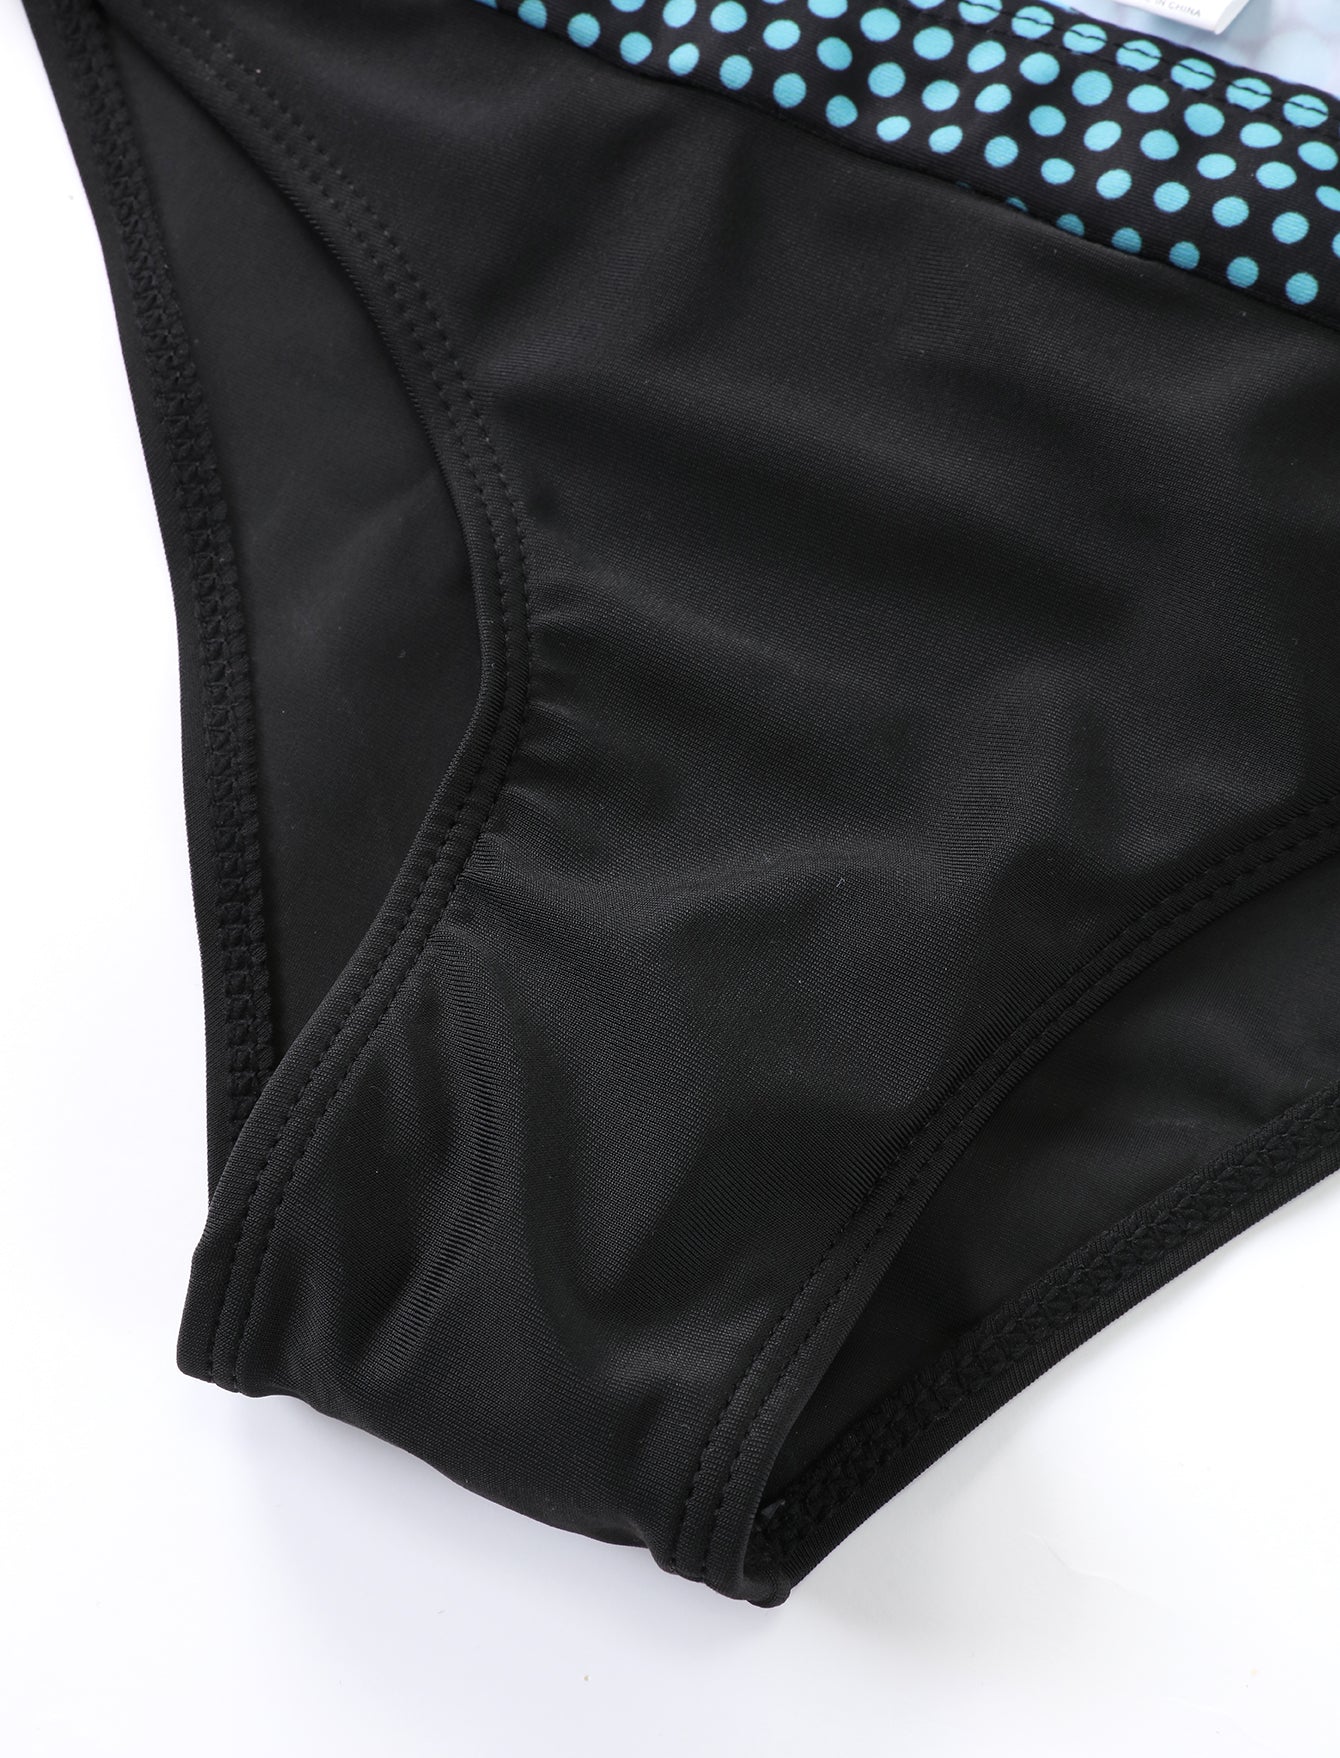 Womens Print Halter Swimwear Top Swimdress Tankini Swimsuits Swimwear Bathing Suit Plus Size S-6XL Sai Feel